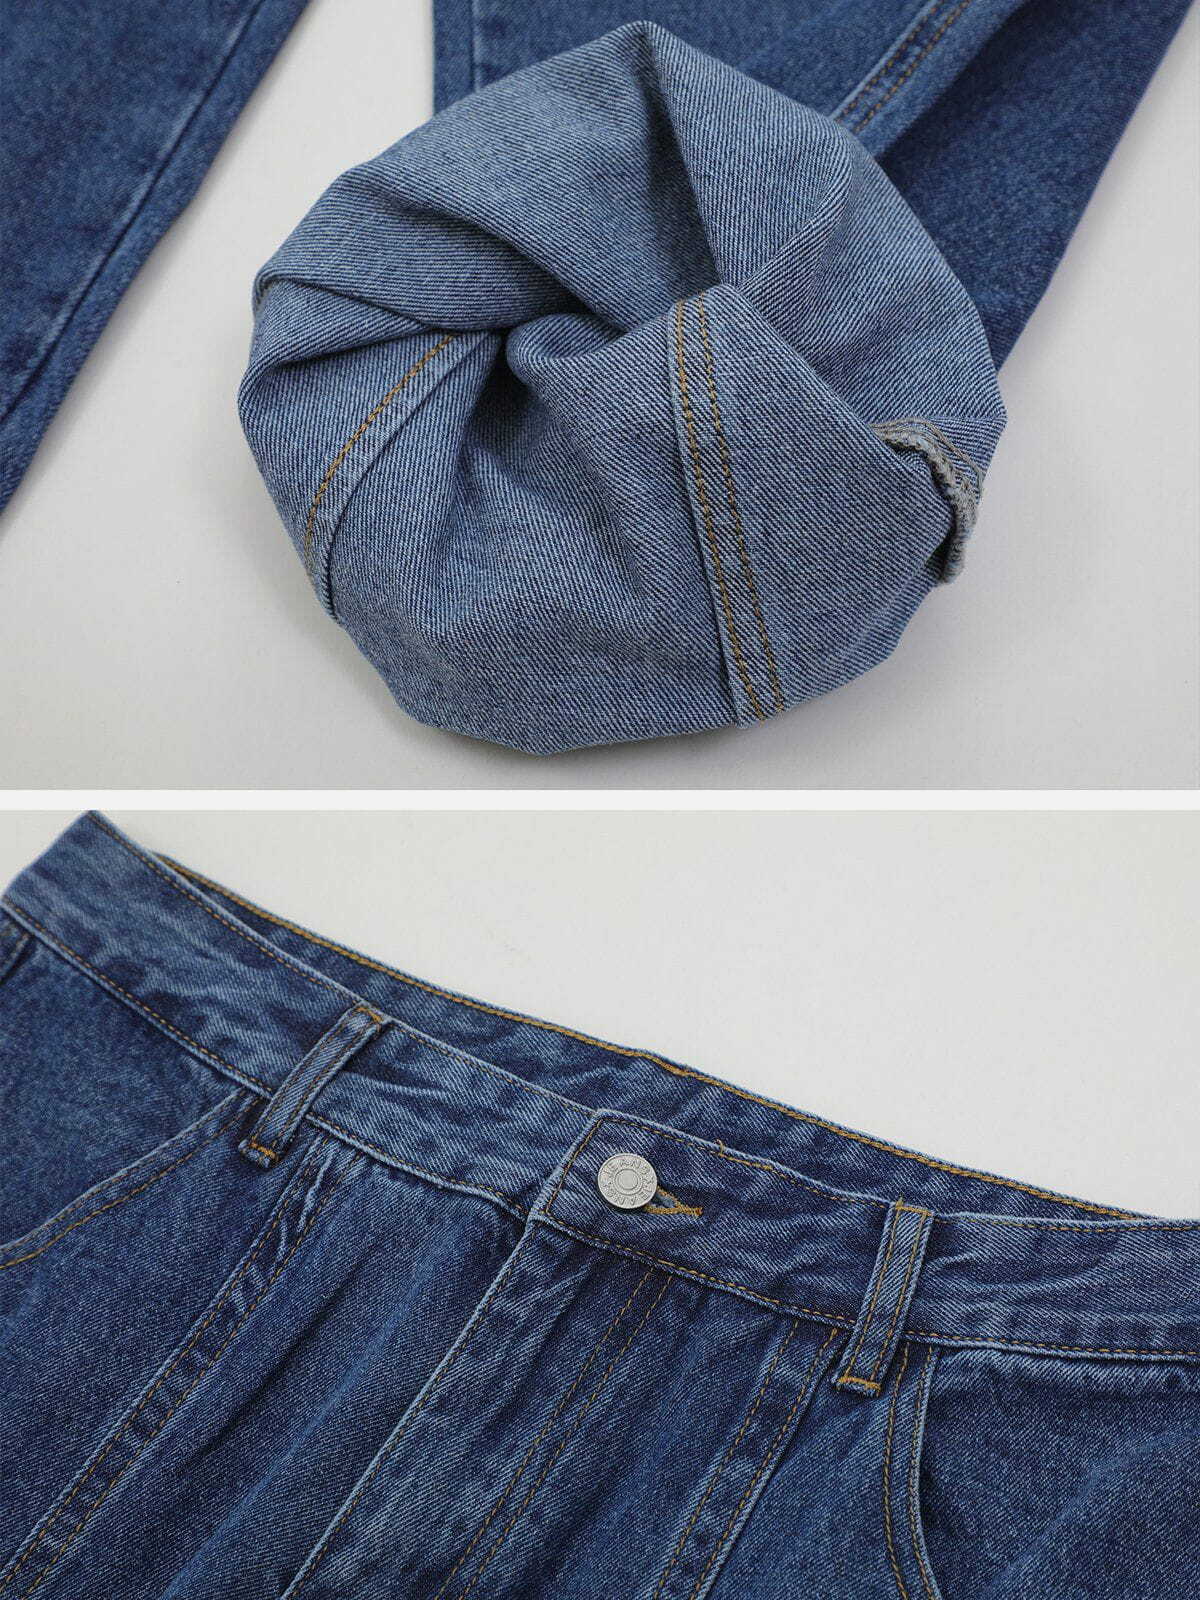 vintage patched pocket jeans edgy y2k streetwear 6534